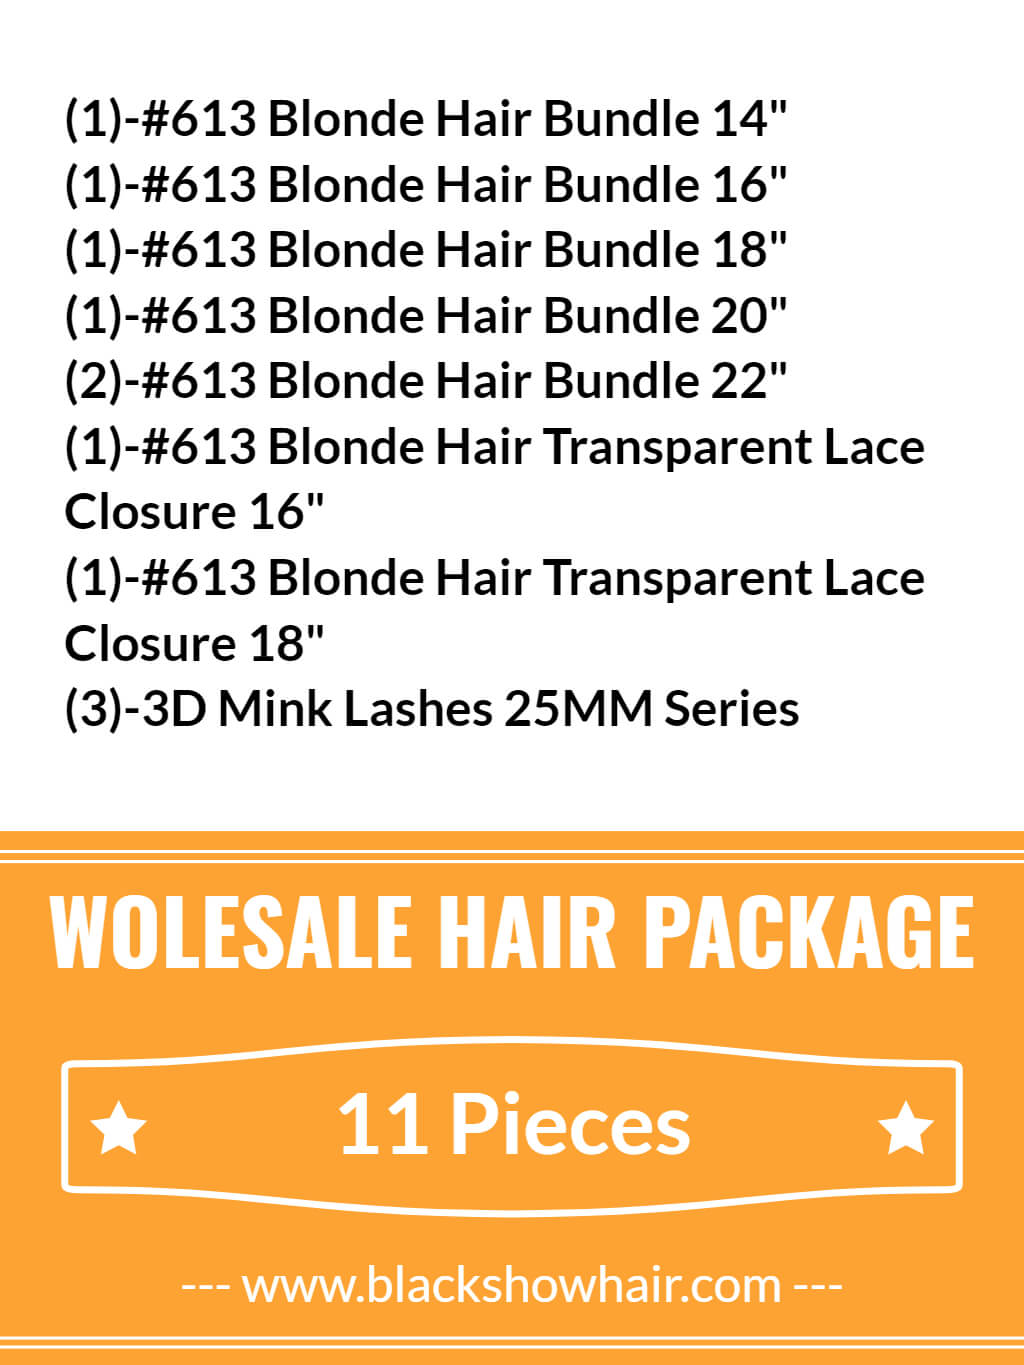 613 Blonde Hair Bundles Wholesale Package 11 Pieces - Black Show Hair